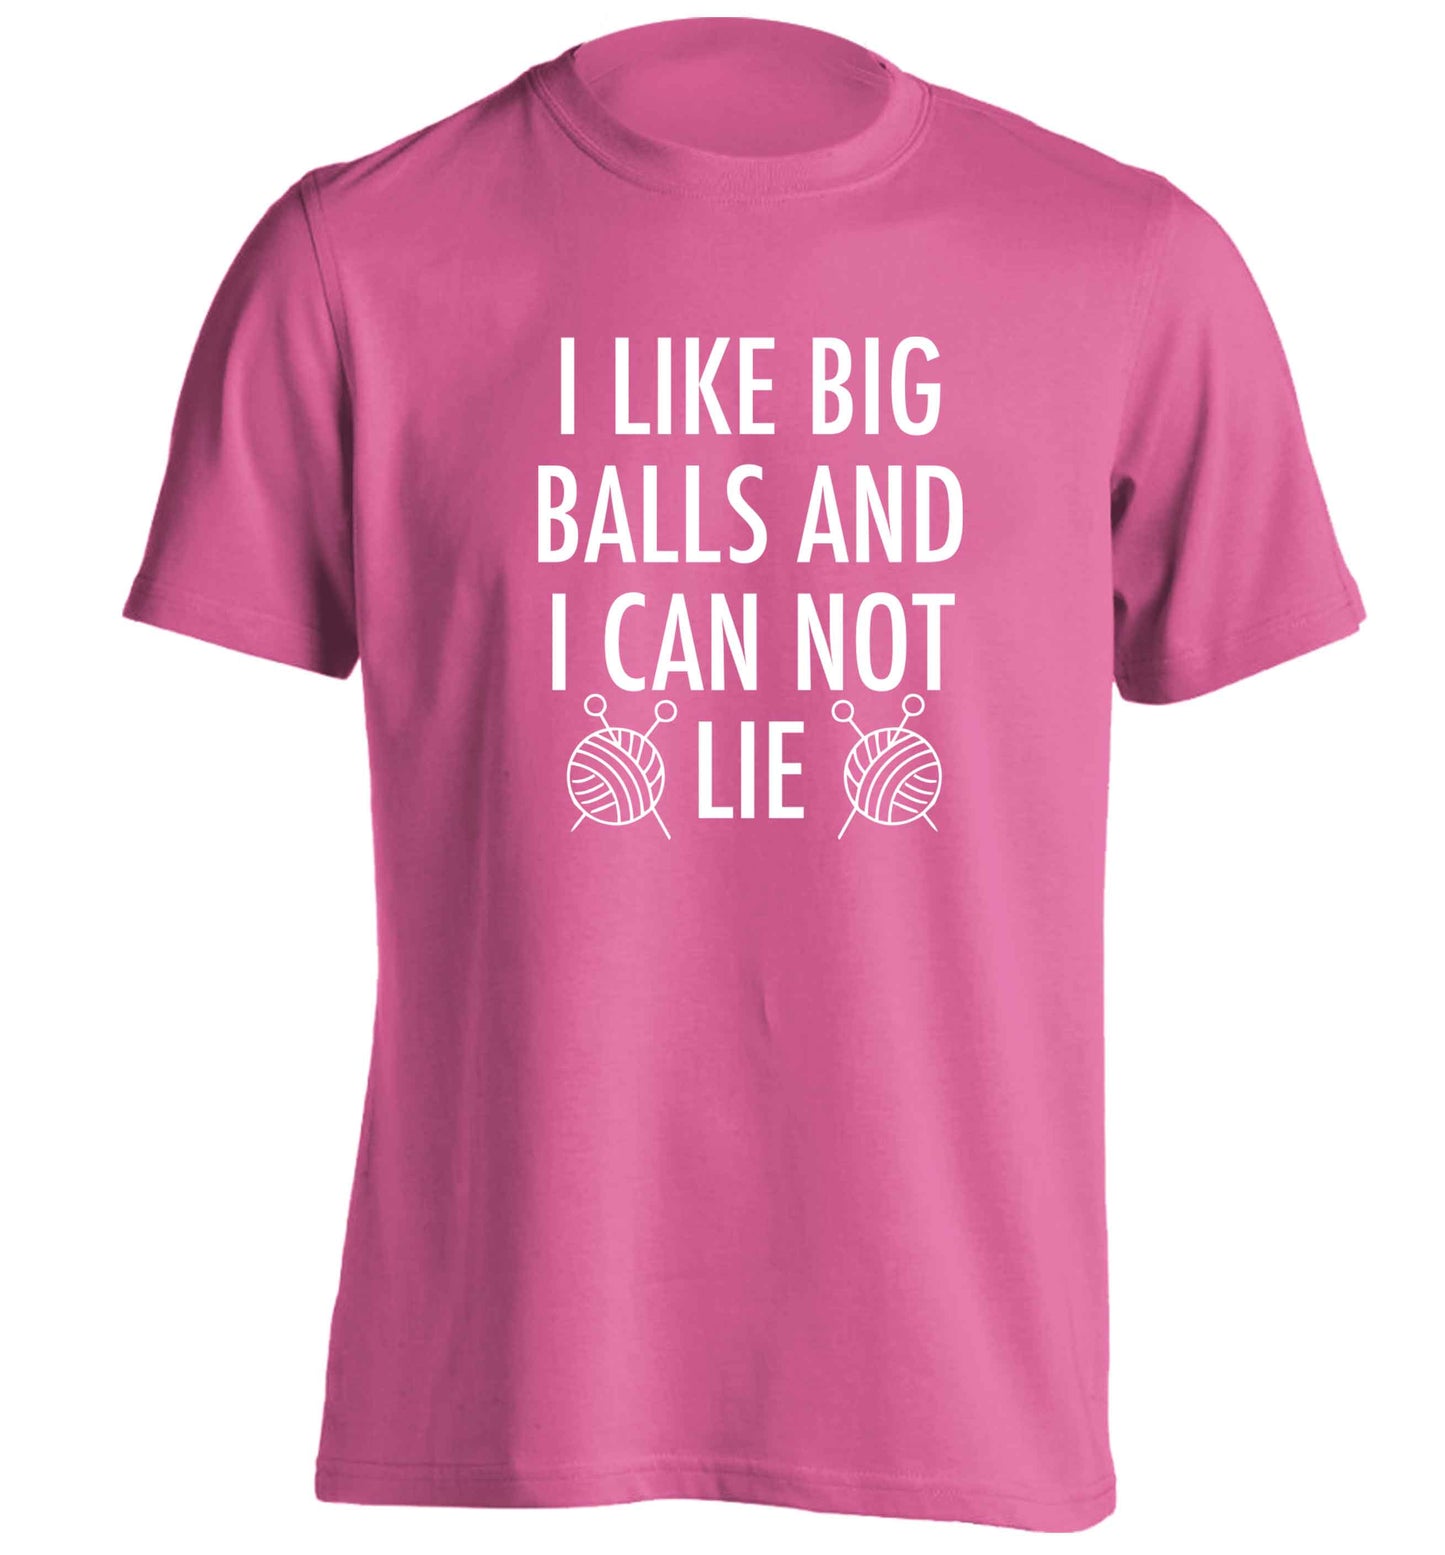 I like big balls and I can not lie adults unisex pink Tshirt 2XL